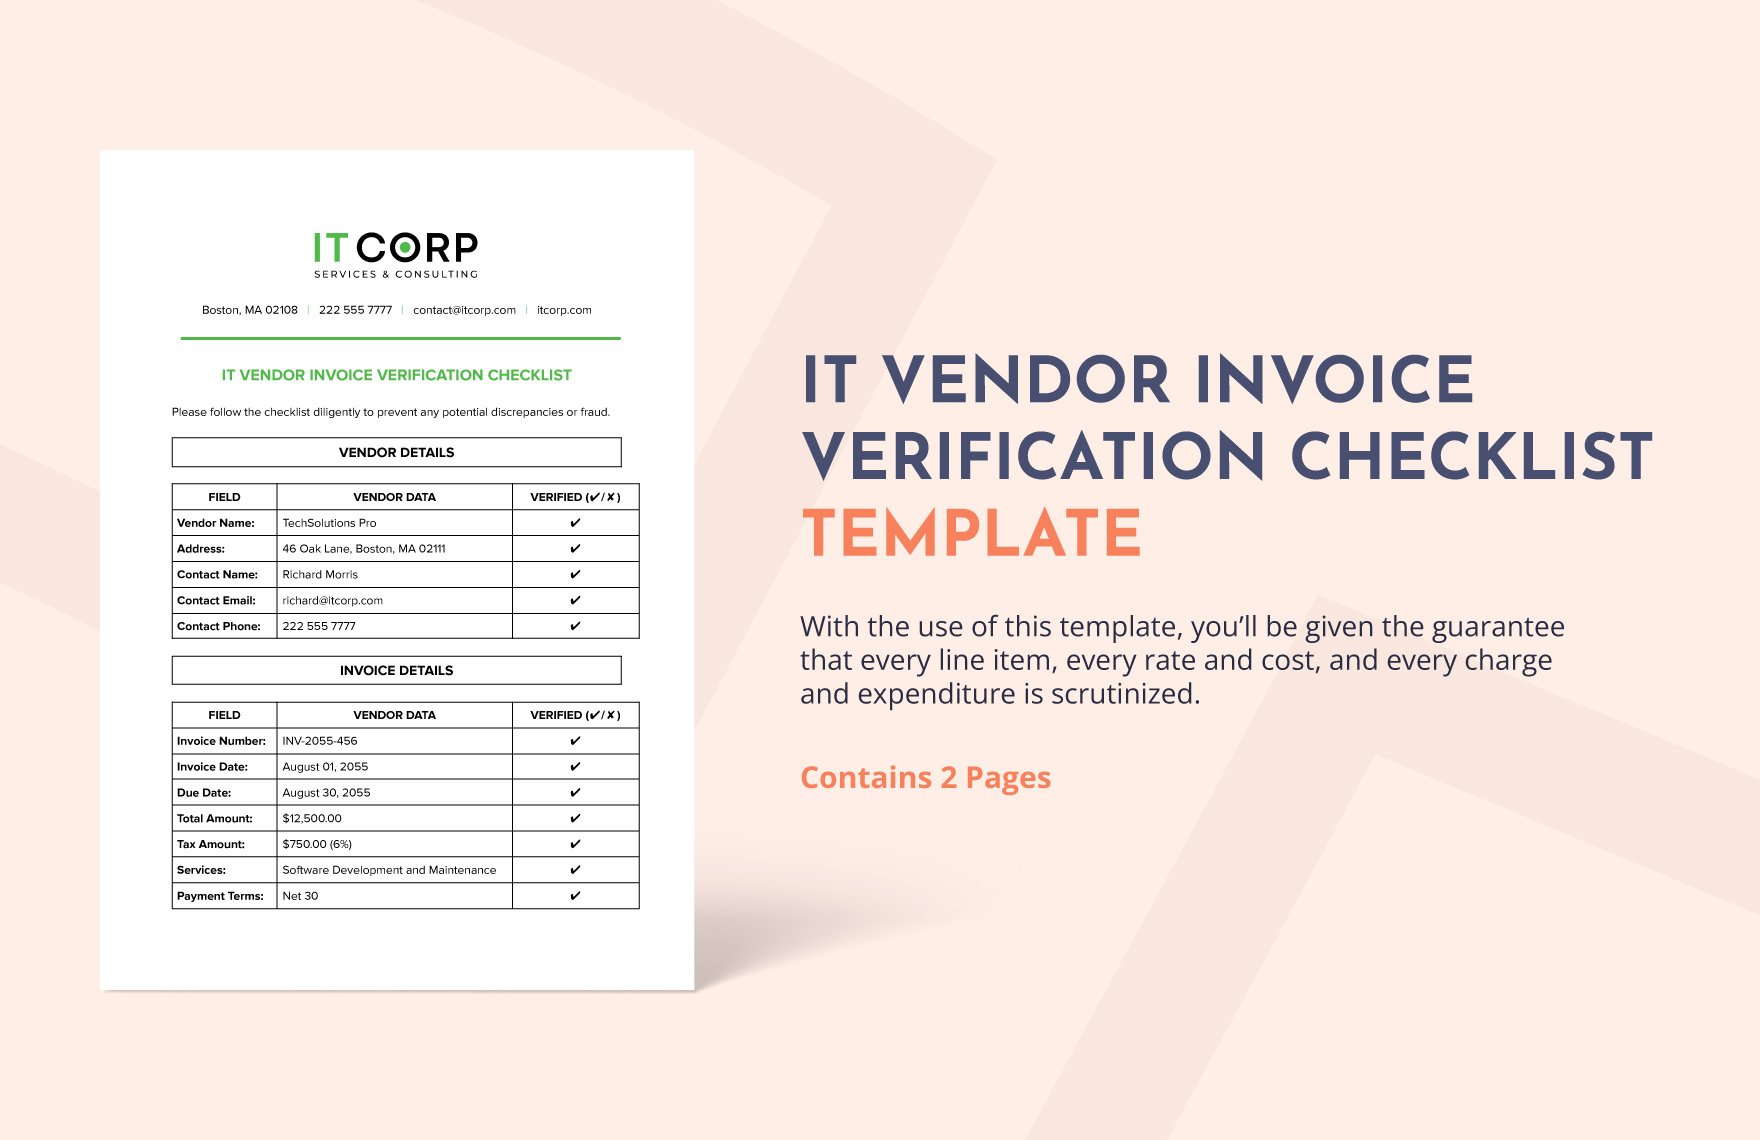 IT Vendor Invoice Verification Checklist Template